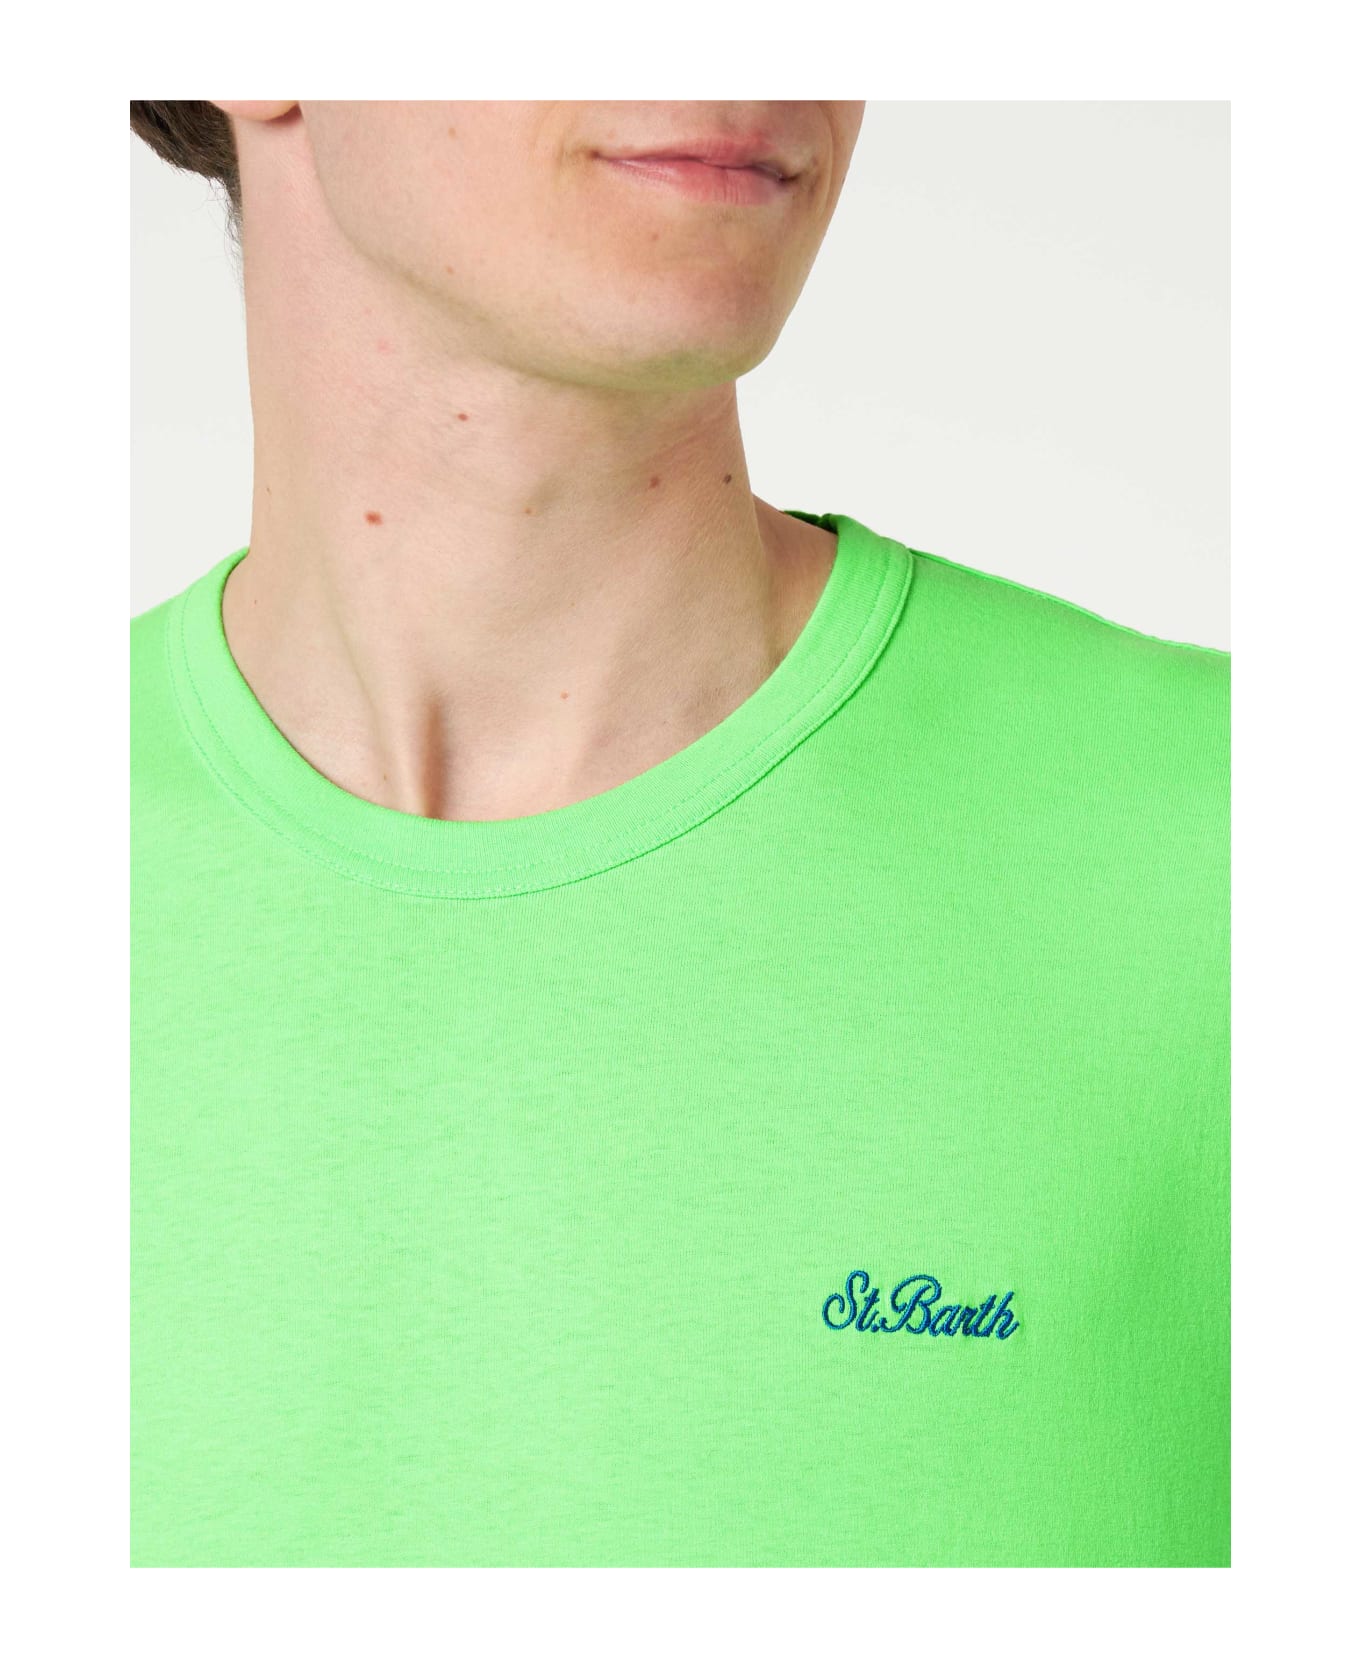 MC2 Saint Barth Man Green Cotton T-shirt - FLUO